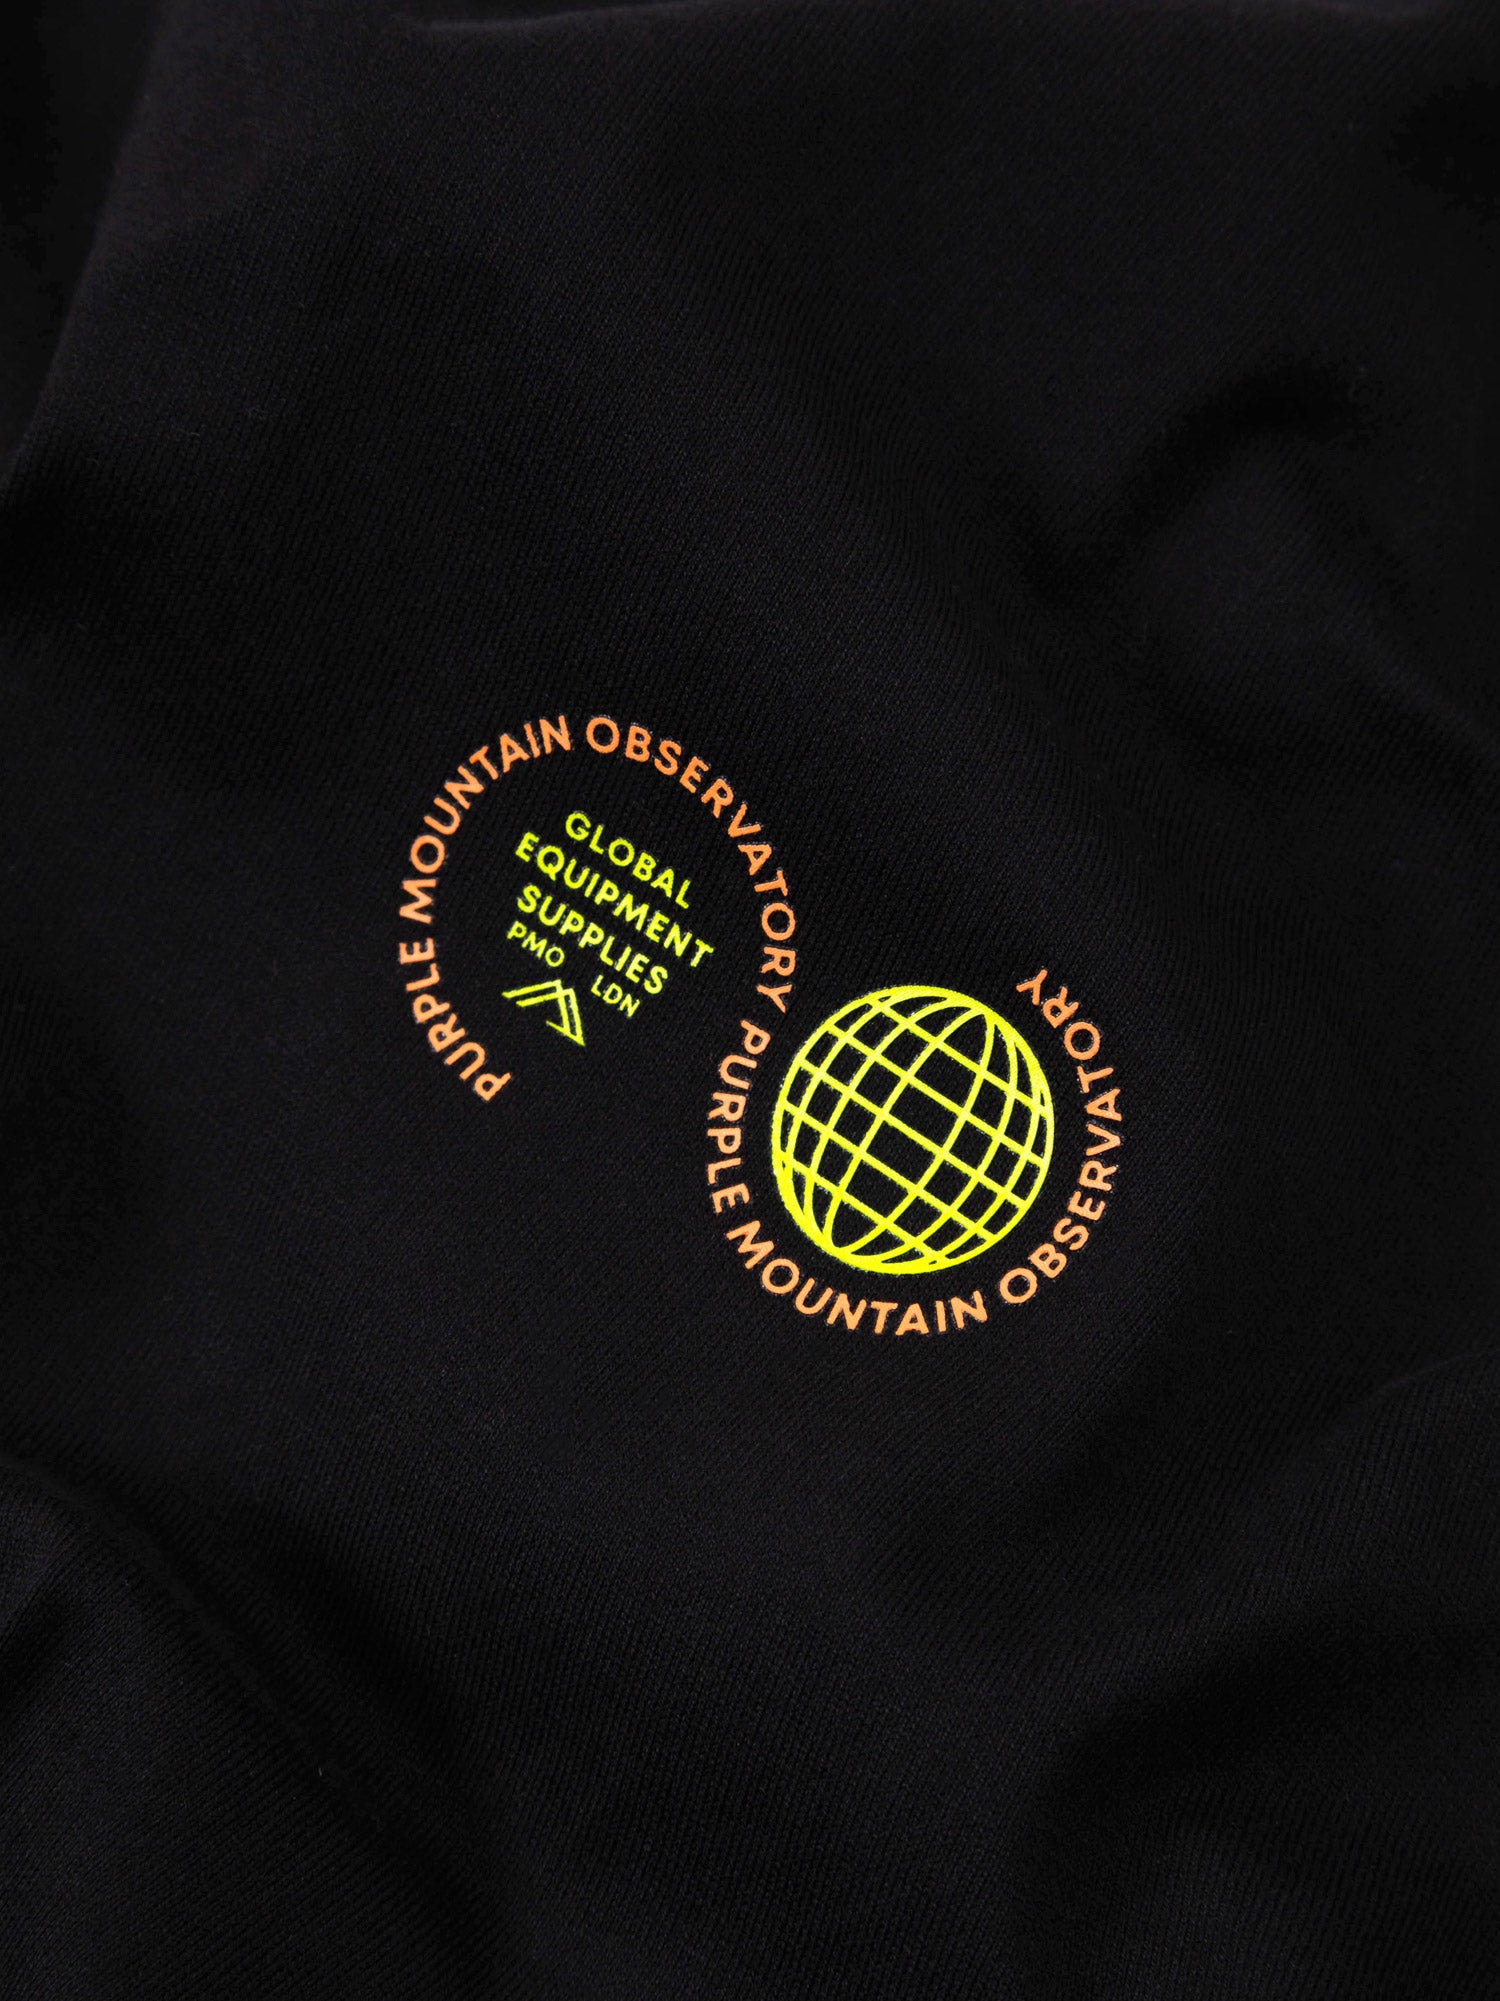 PMO Globe Logo L/S Tee Black